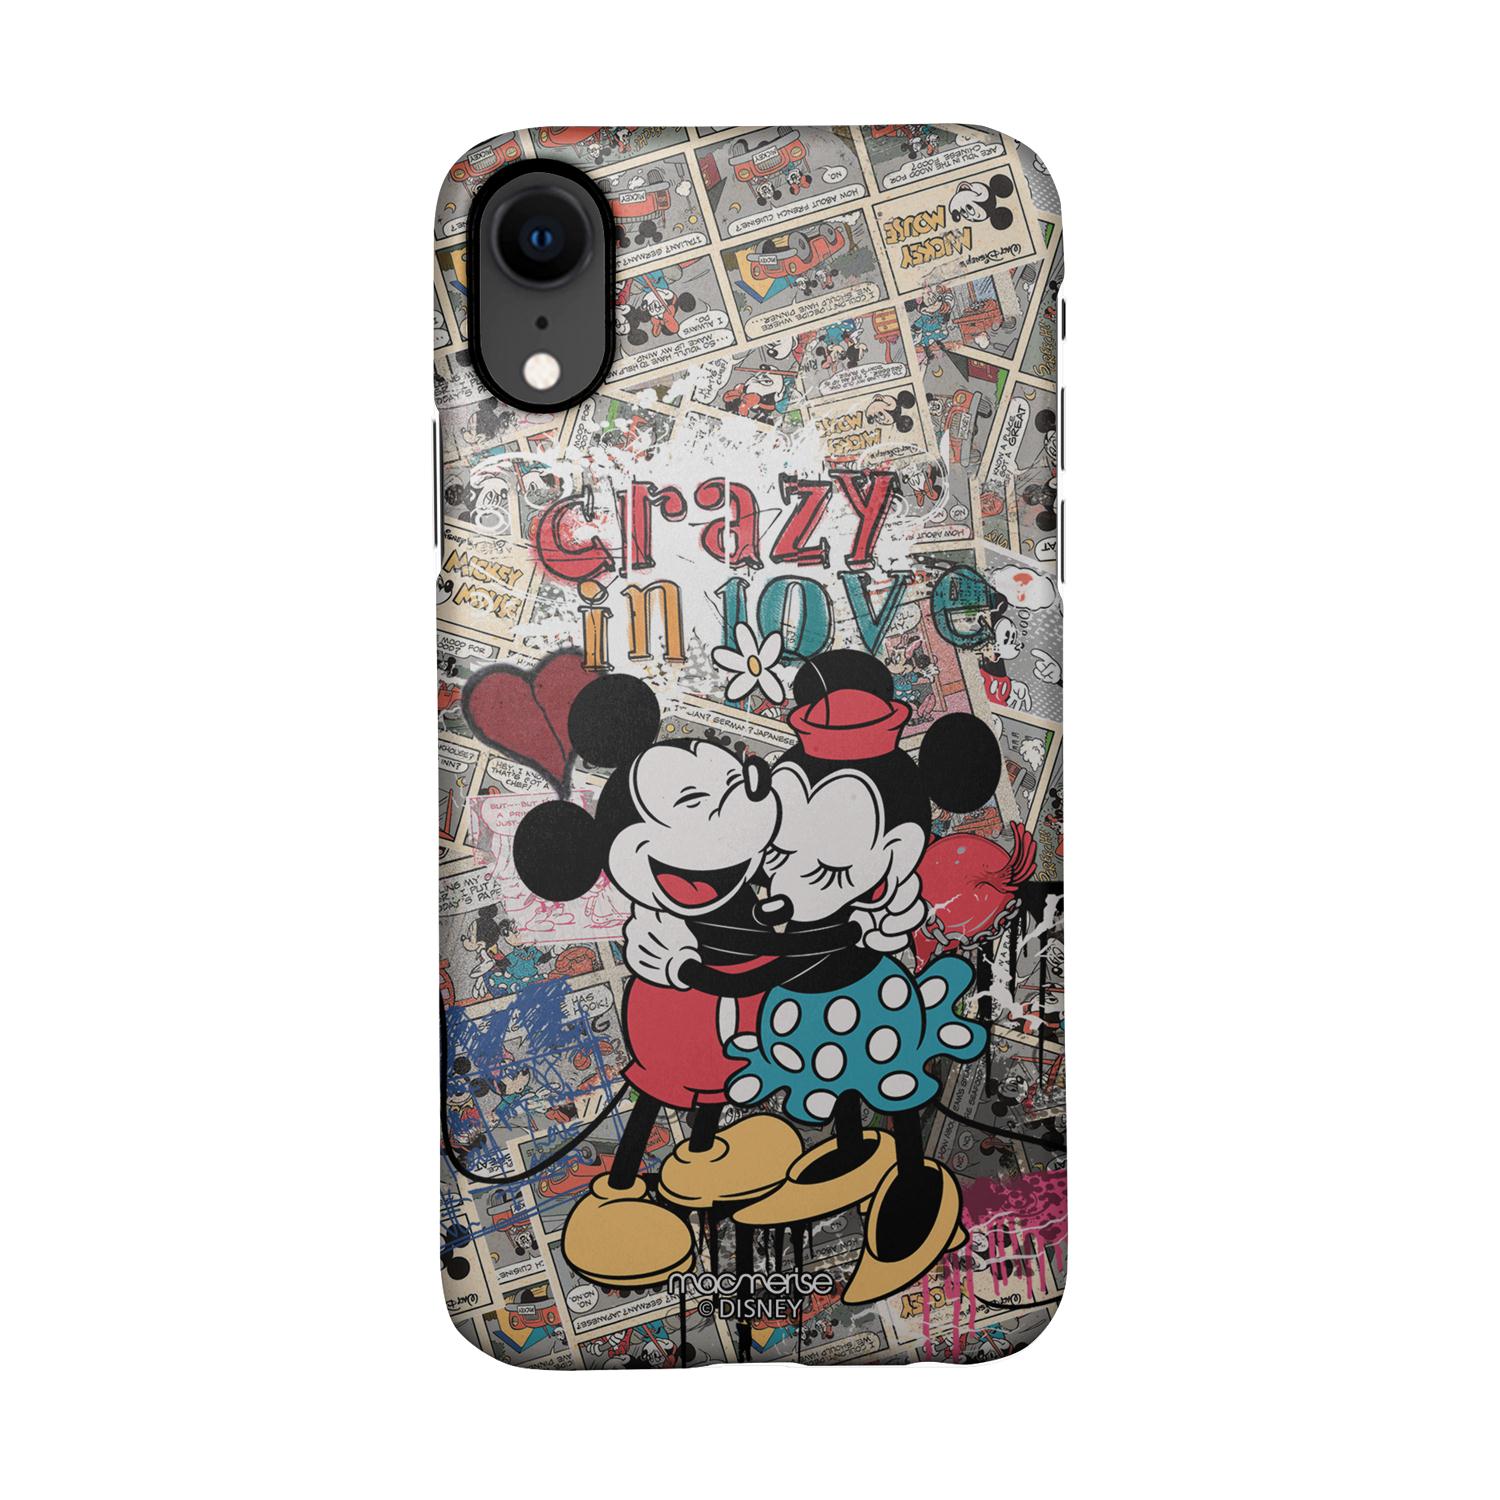 Buy Crazy in love - Sleek Phone Case for iPhone XR Online